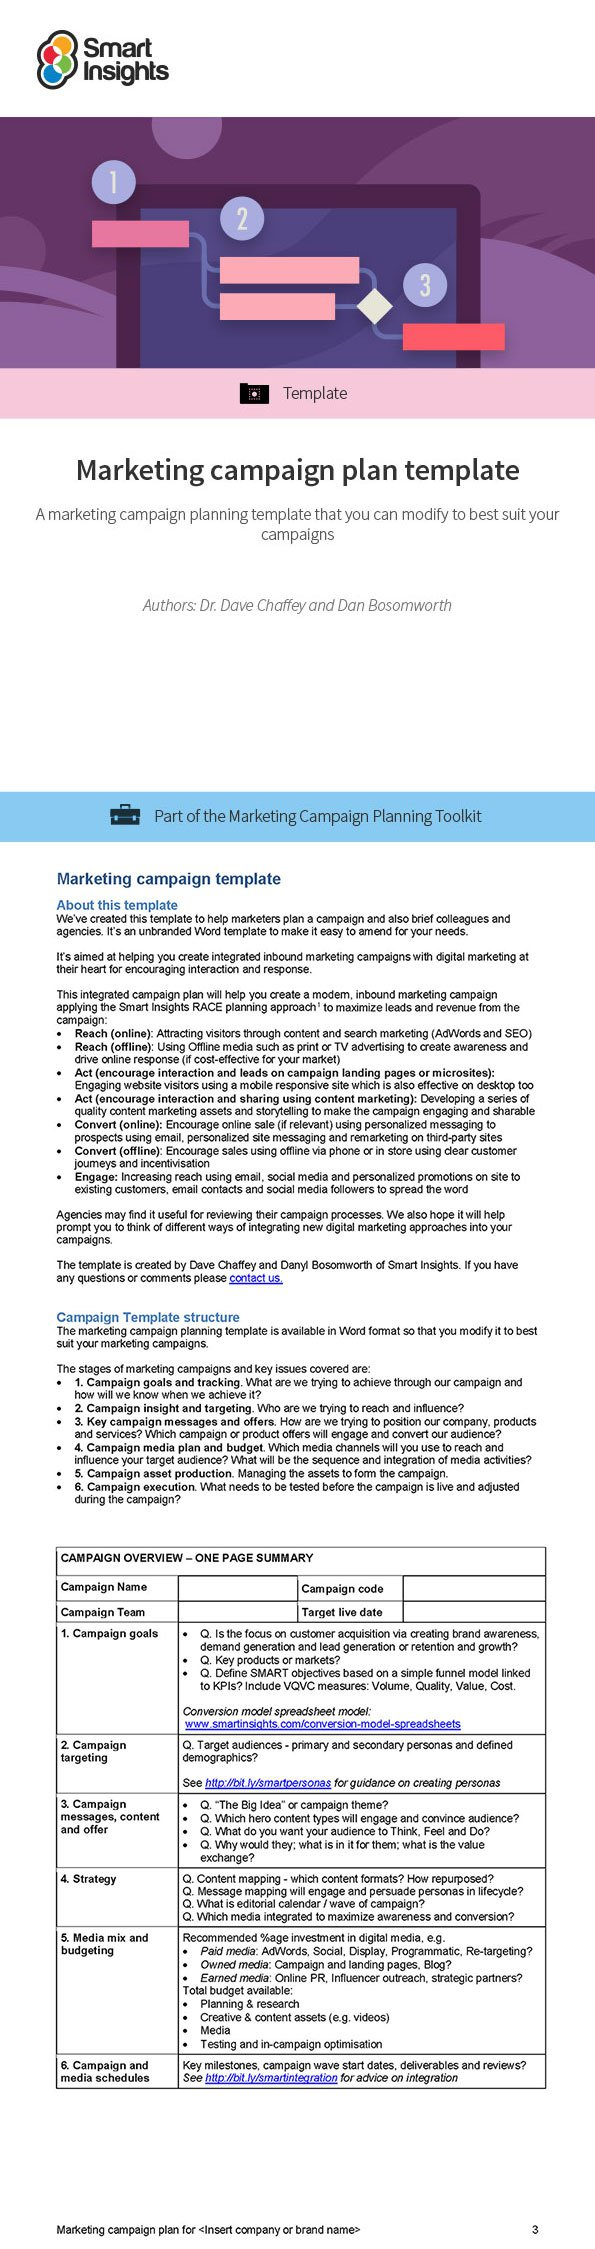 Marketing Campaign Plan Template | Smart Insights inside Marketing Campaign Tracking Spreadsheet